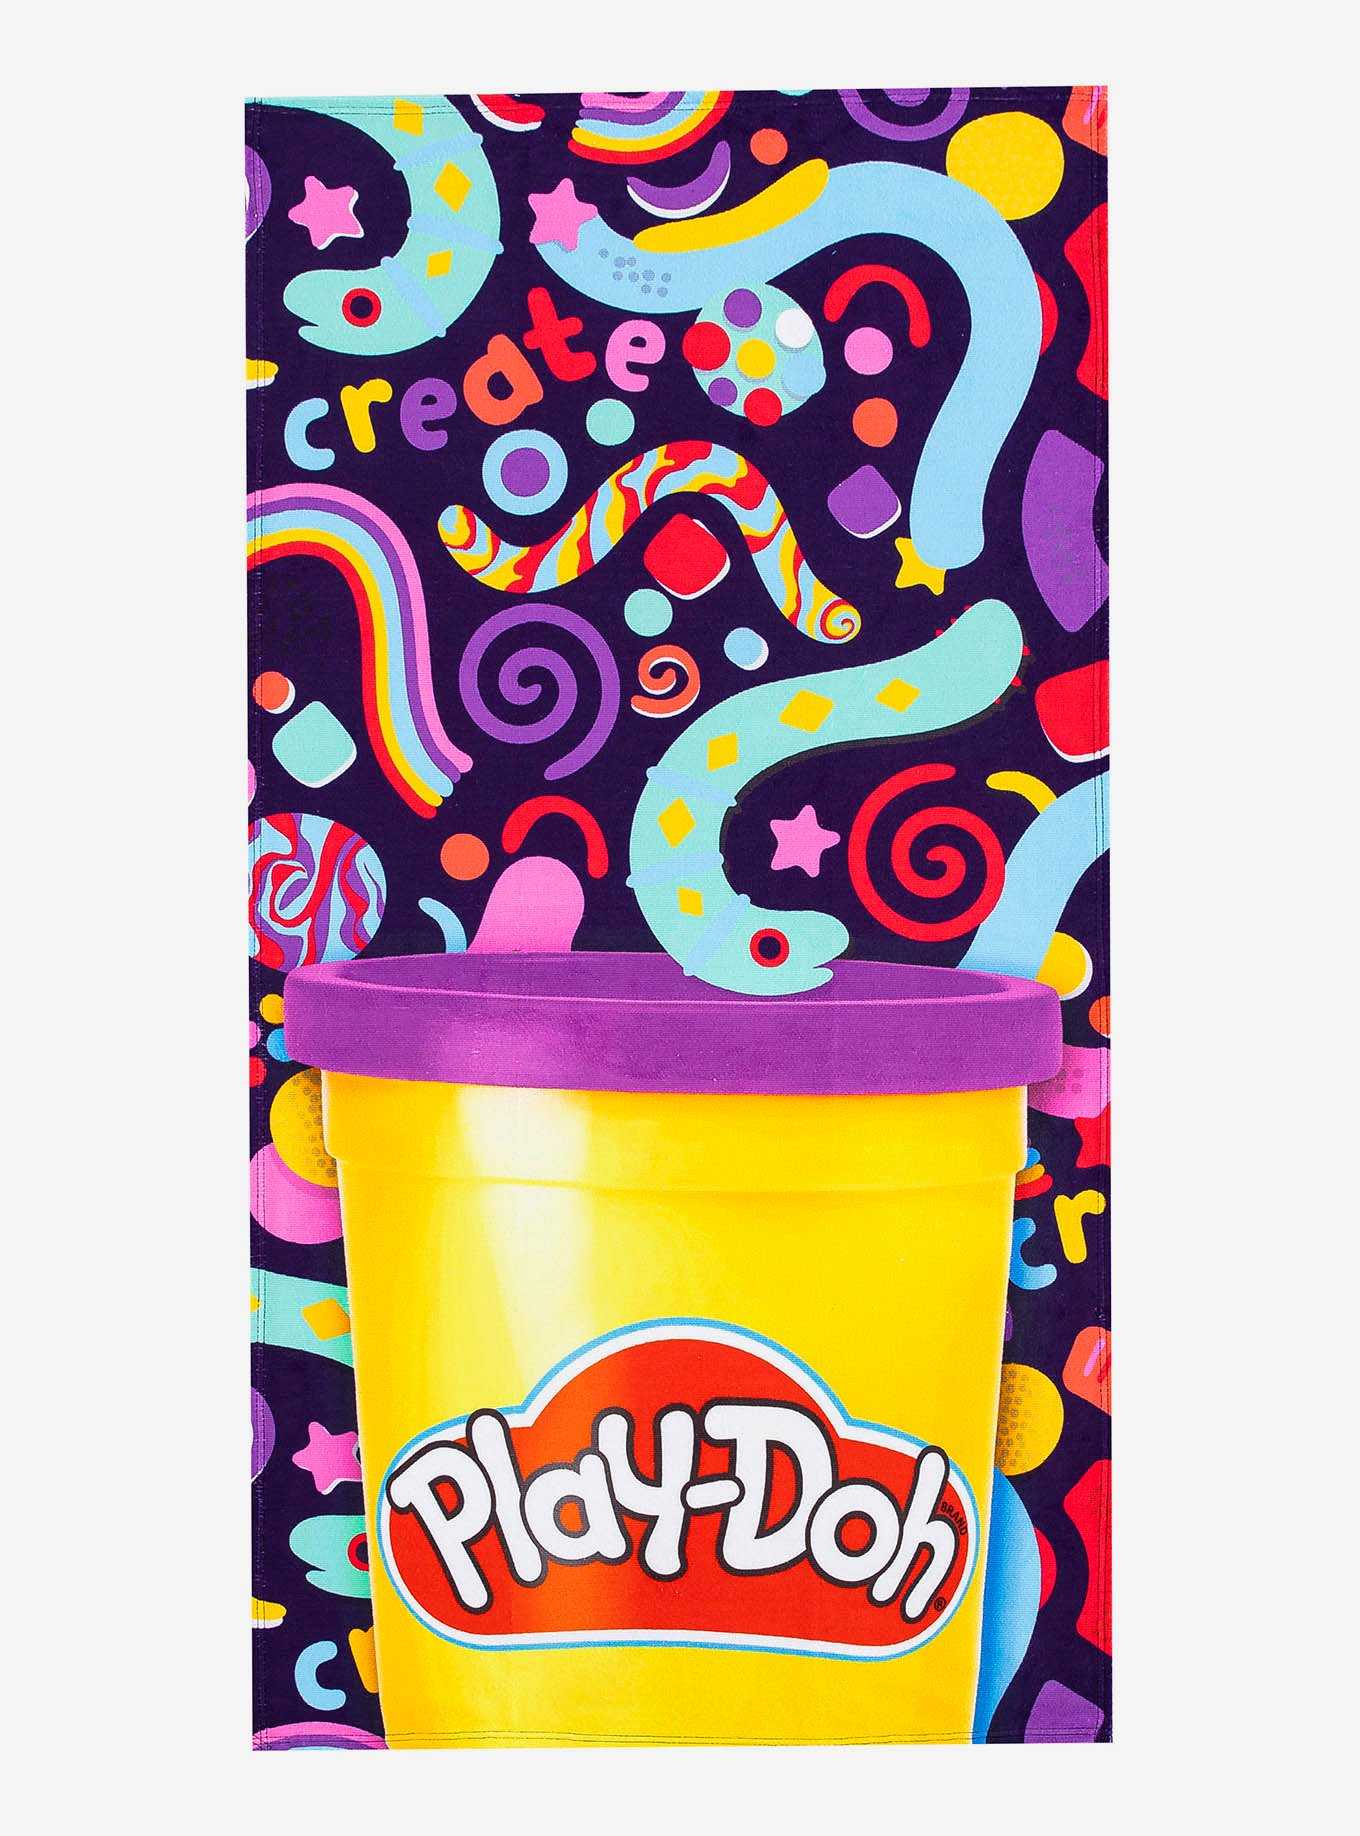 Play-Doh The Dough Beach Towel, , hi-res